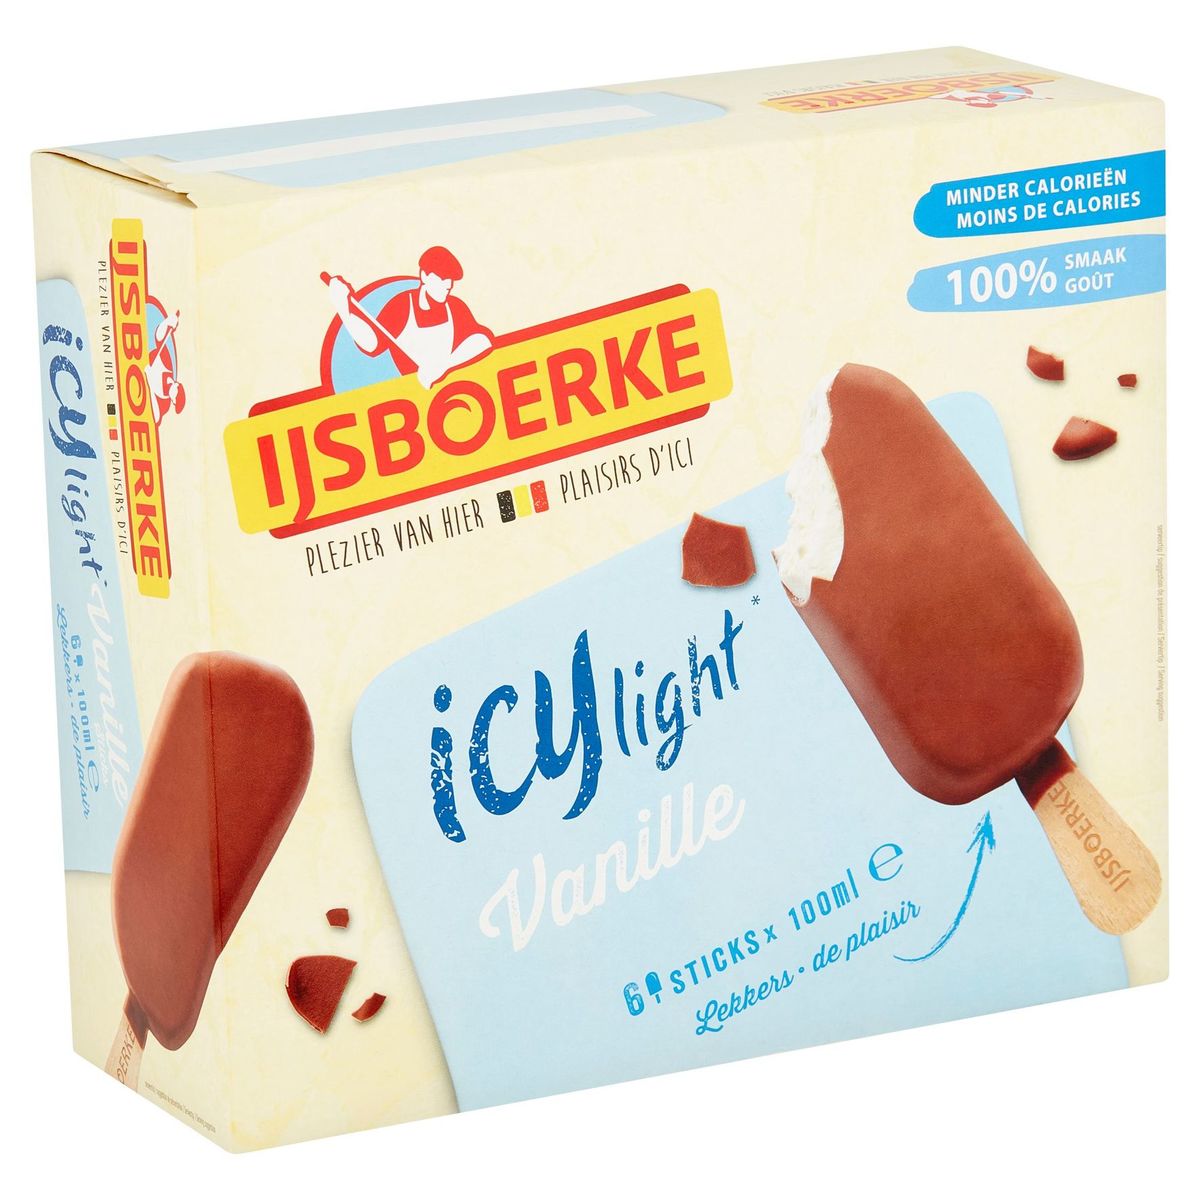 IJsboerke Icy Light Vanille Sticks 6 x 100 ml